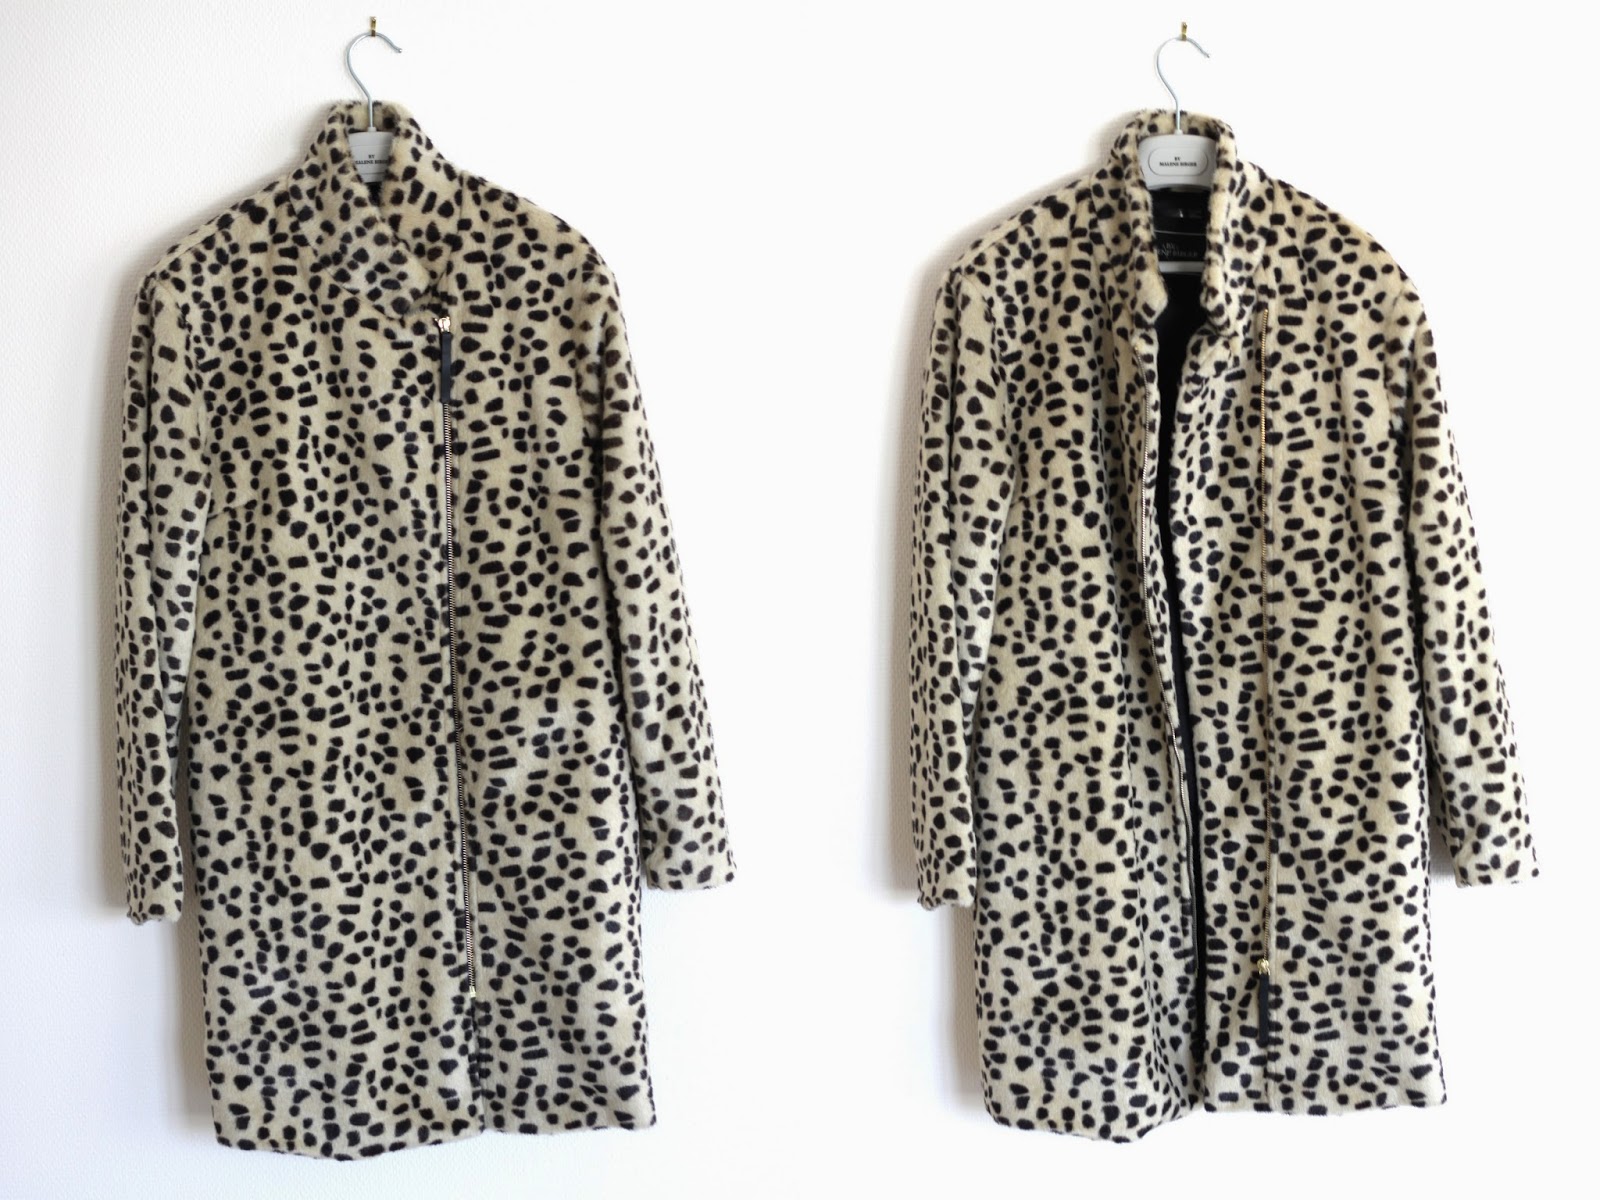 Stina's Vintage Store: by Malene Birger leopard coat